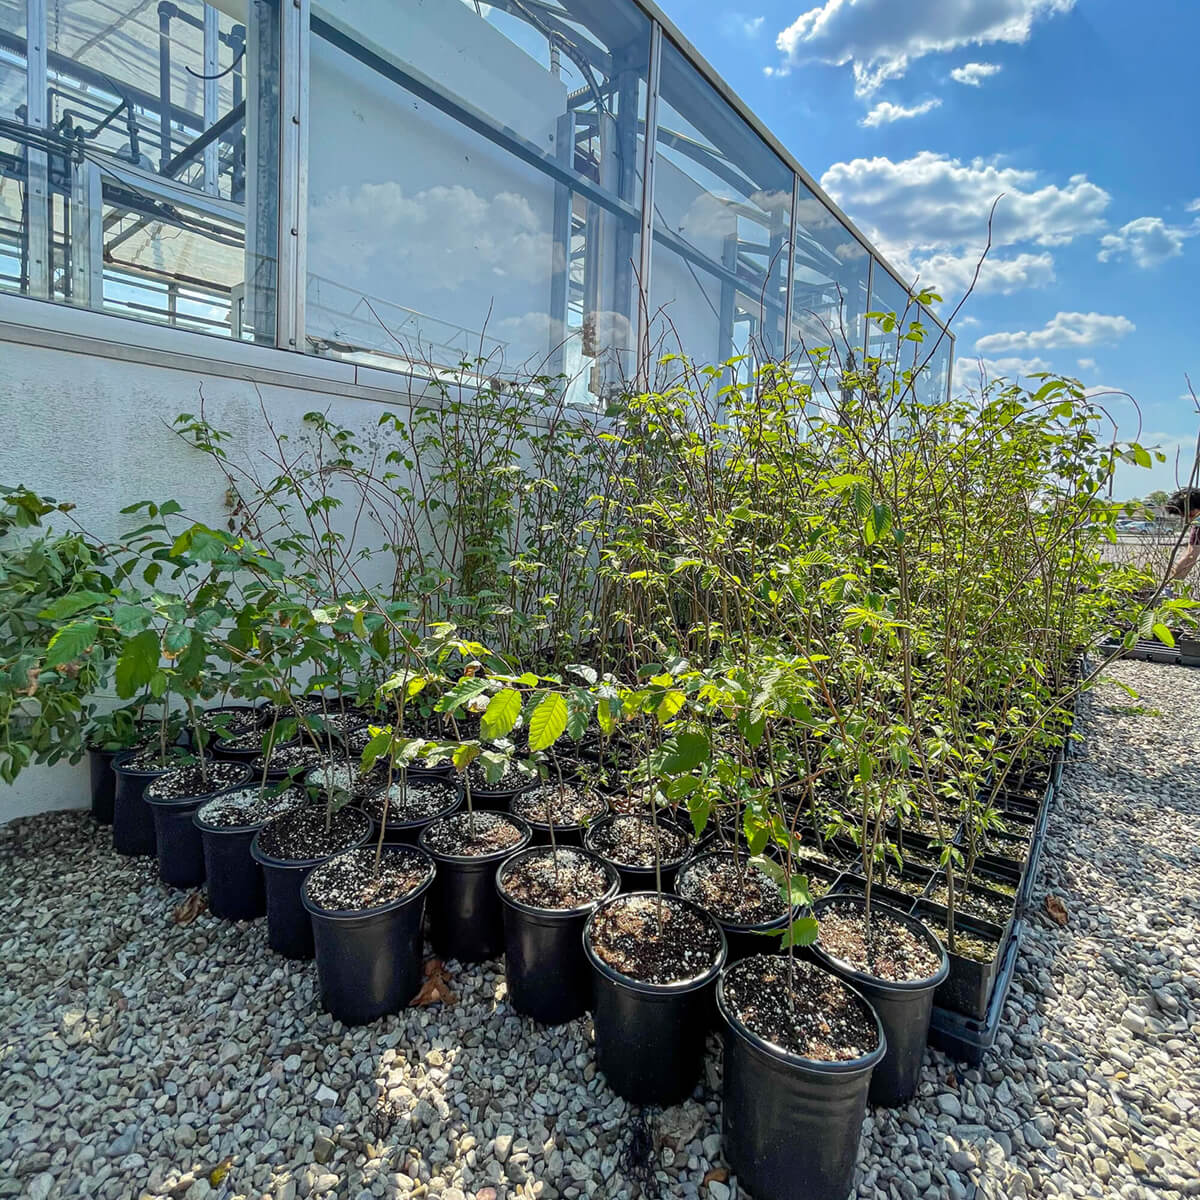 plants outside a greenhouse